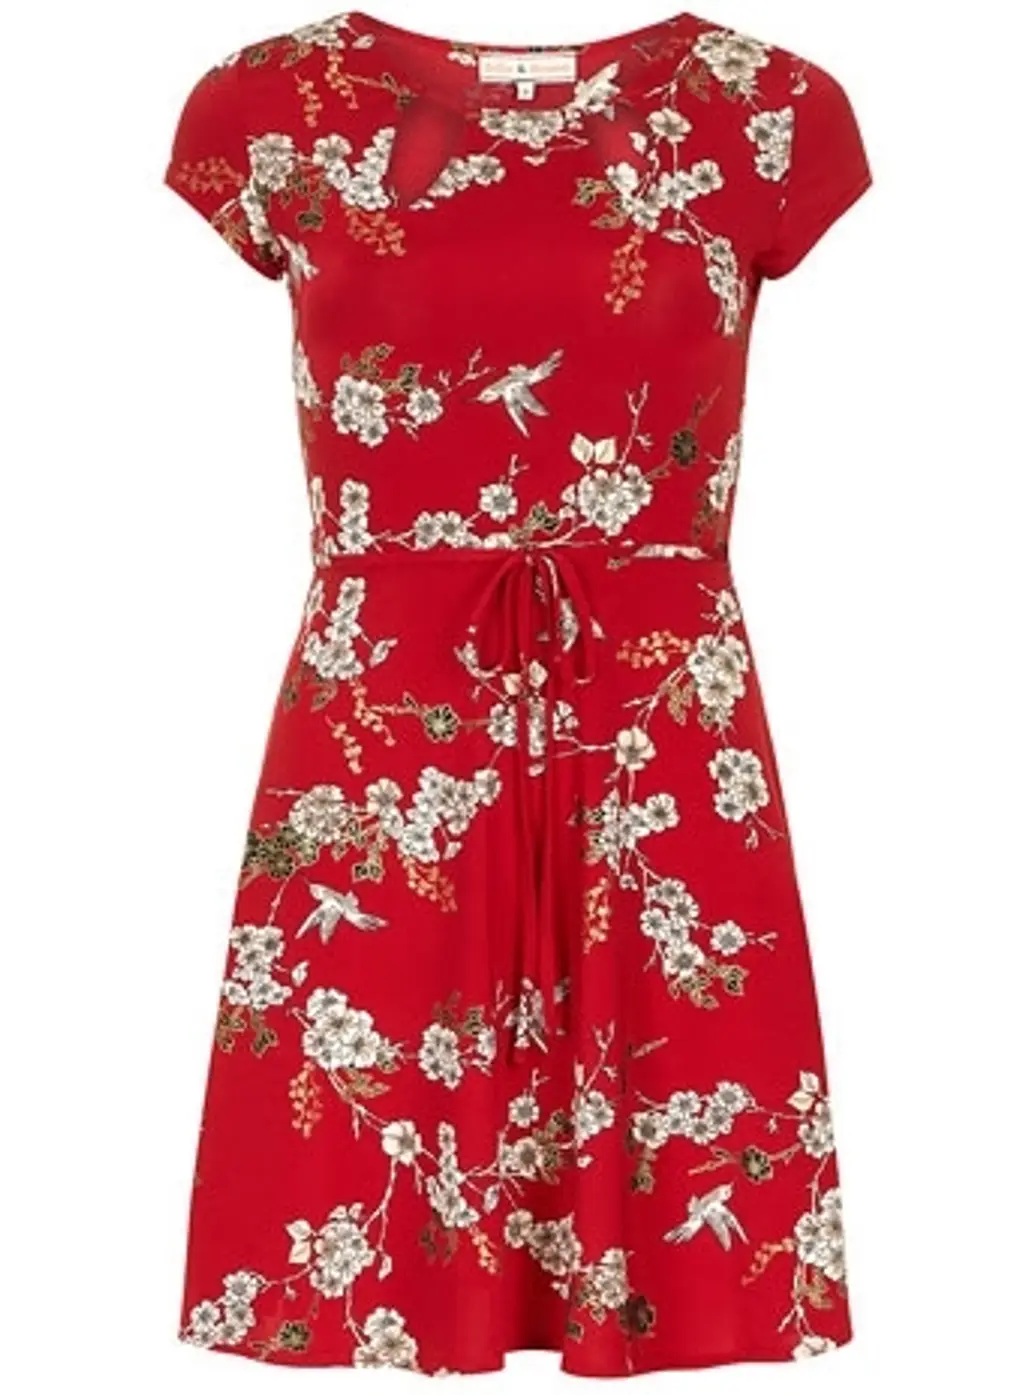 Dorothy Perkins – Billie and Blossom Red Bird Slinky Dress